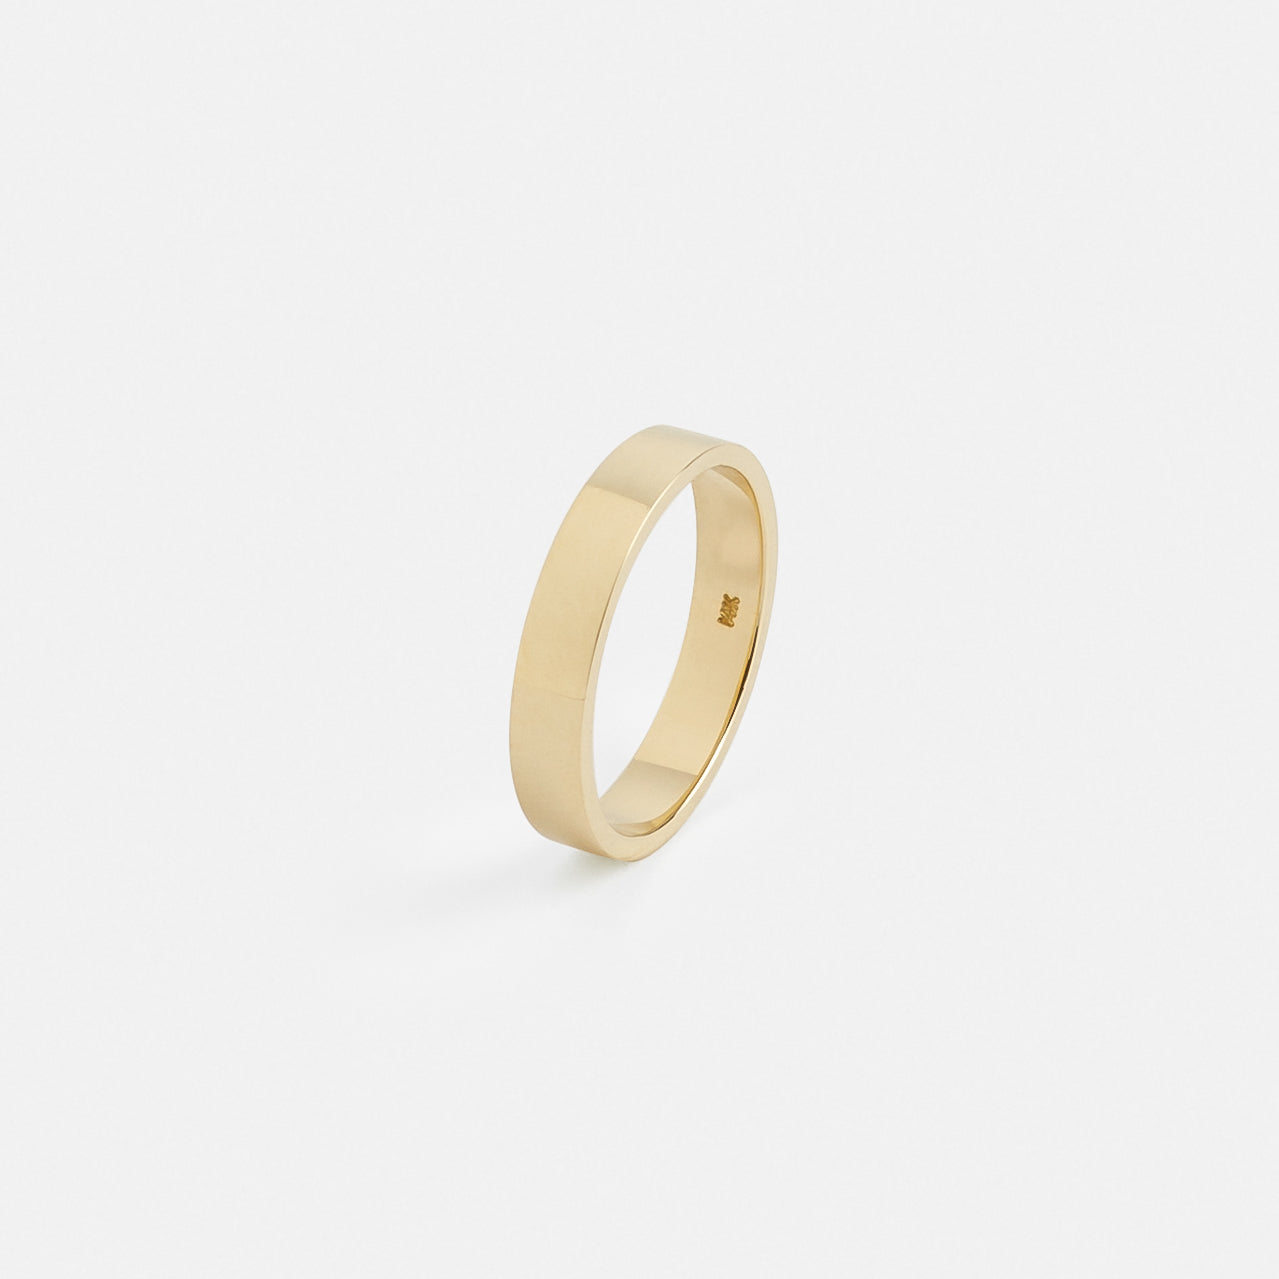 Eldo Simple Ring in 14k Gold By SHW Fine Jewelry NYC